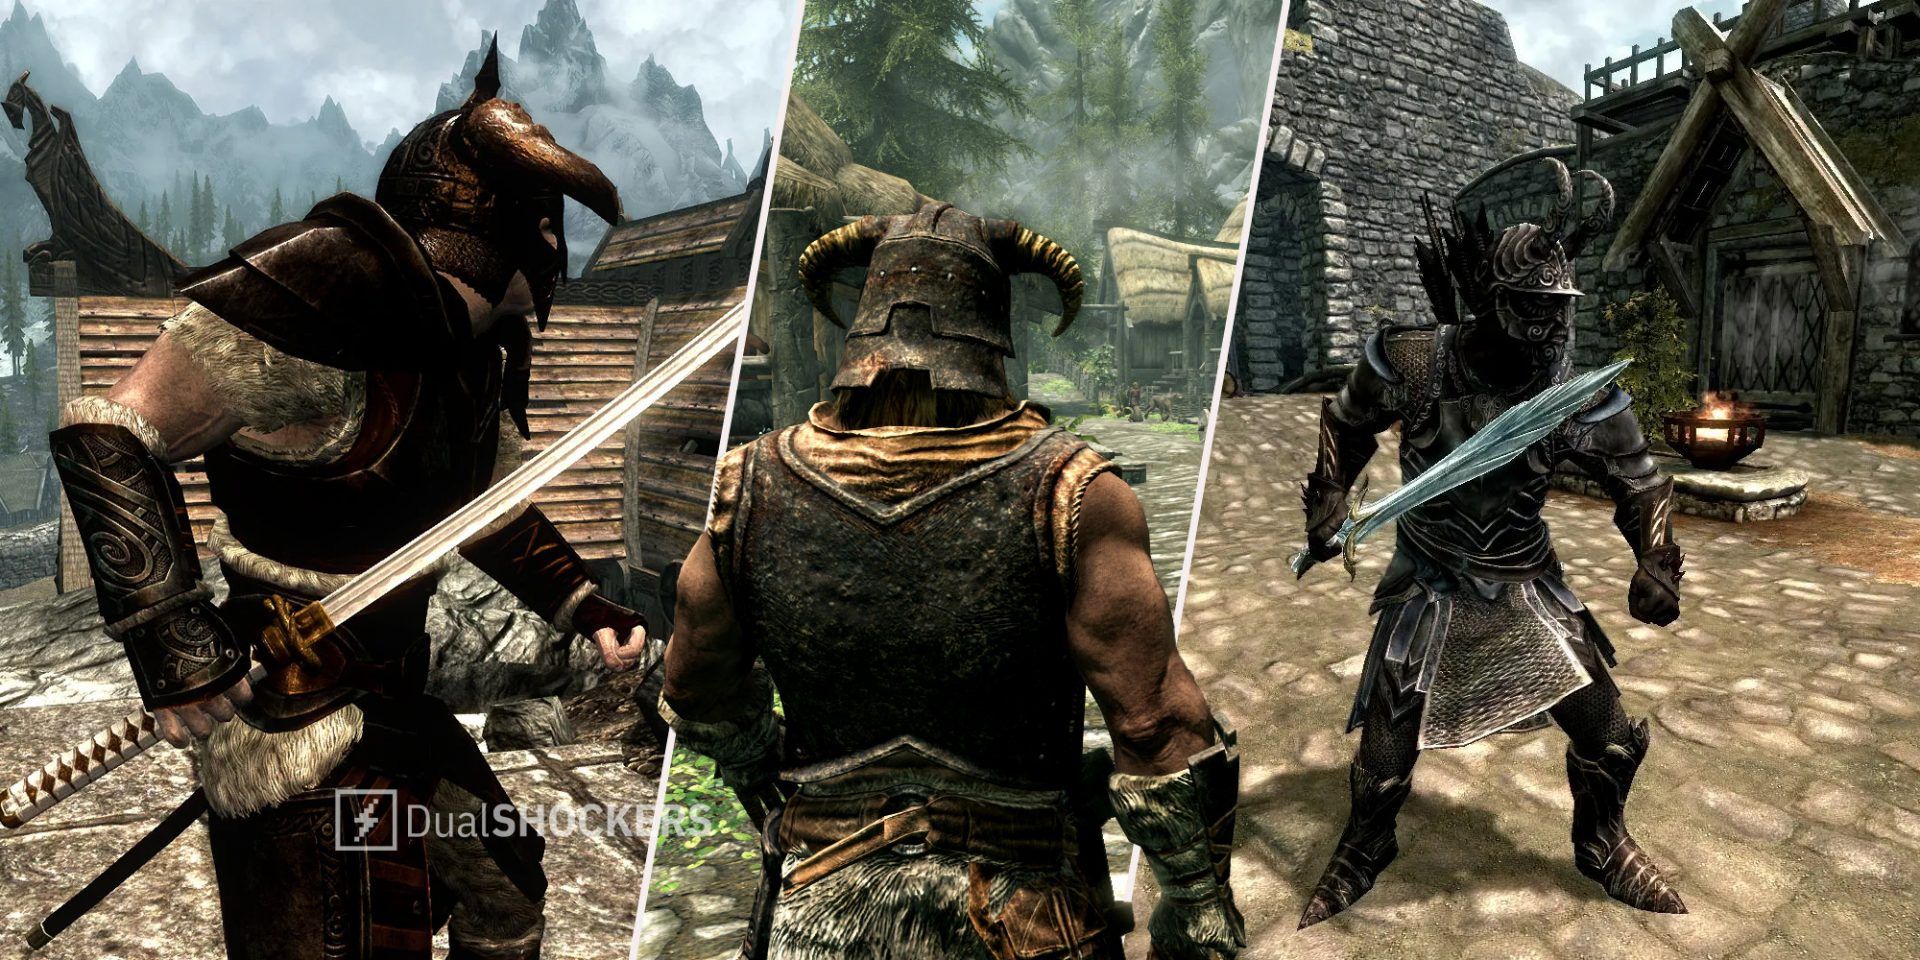 Skyrim player with sword on left, Skyrim Dovahkiin in middle, Skyrim player with sword on right